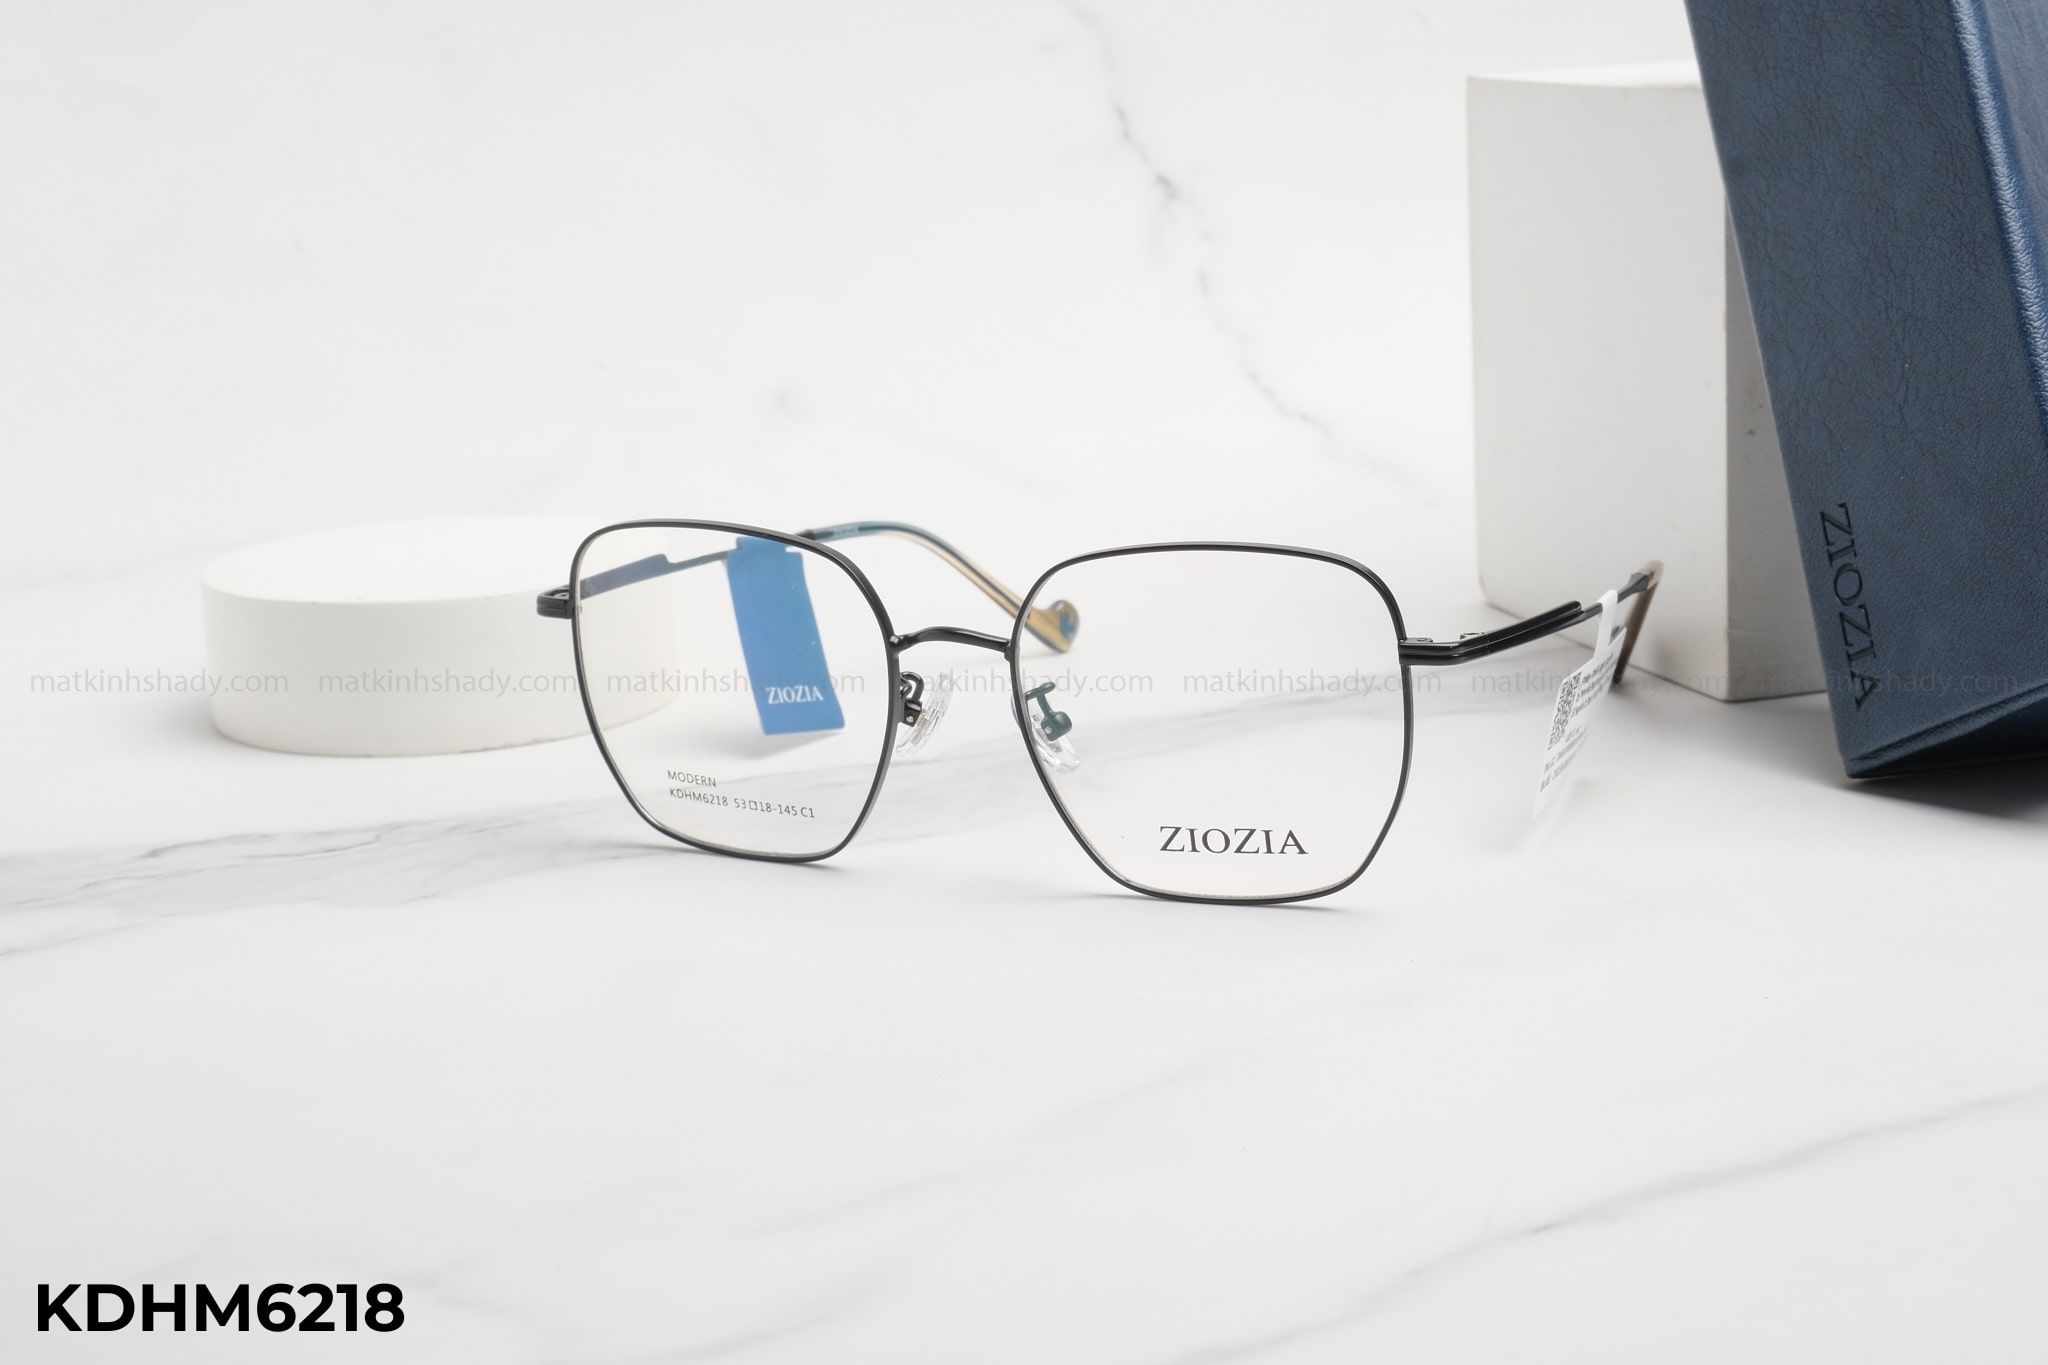  ZIOZIA Eyewear - Glasses - KDHM6218 